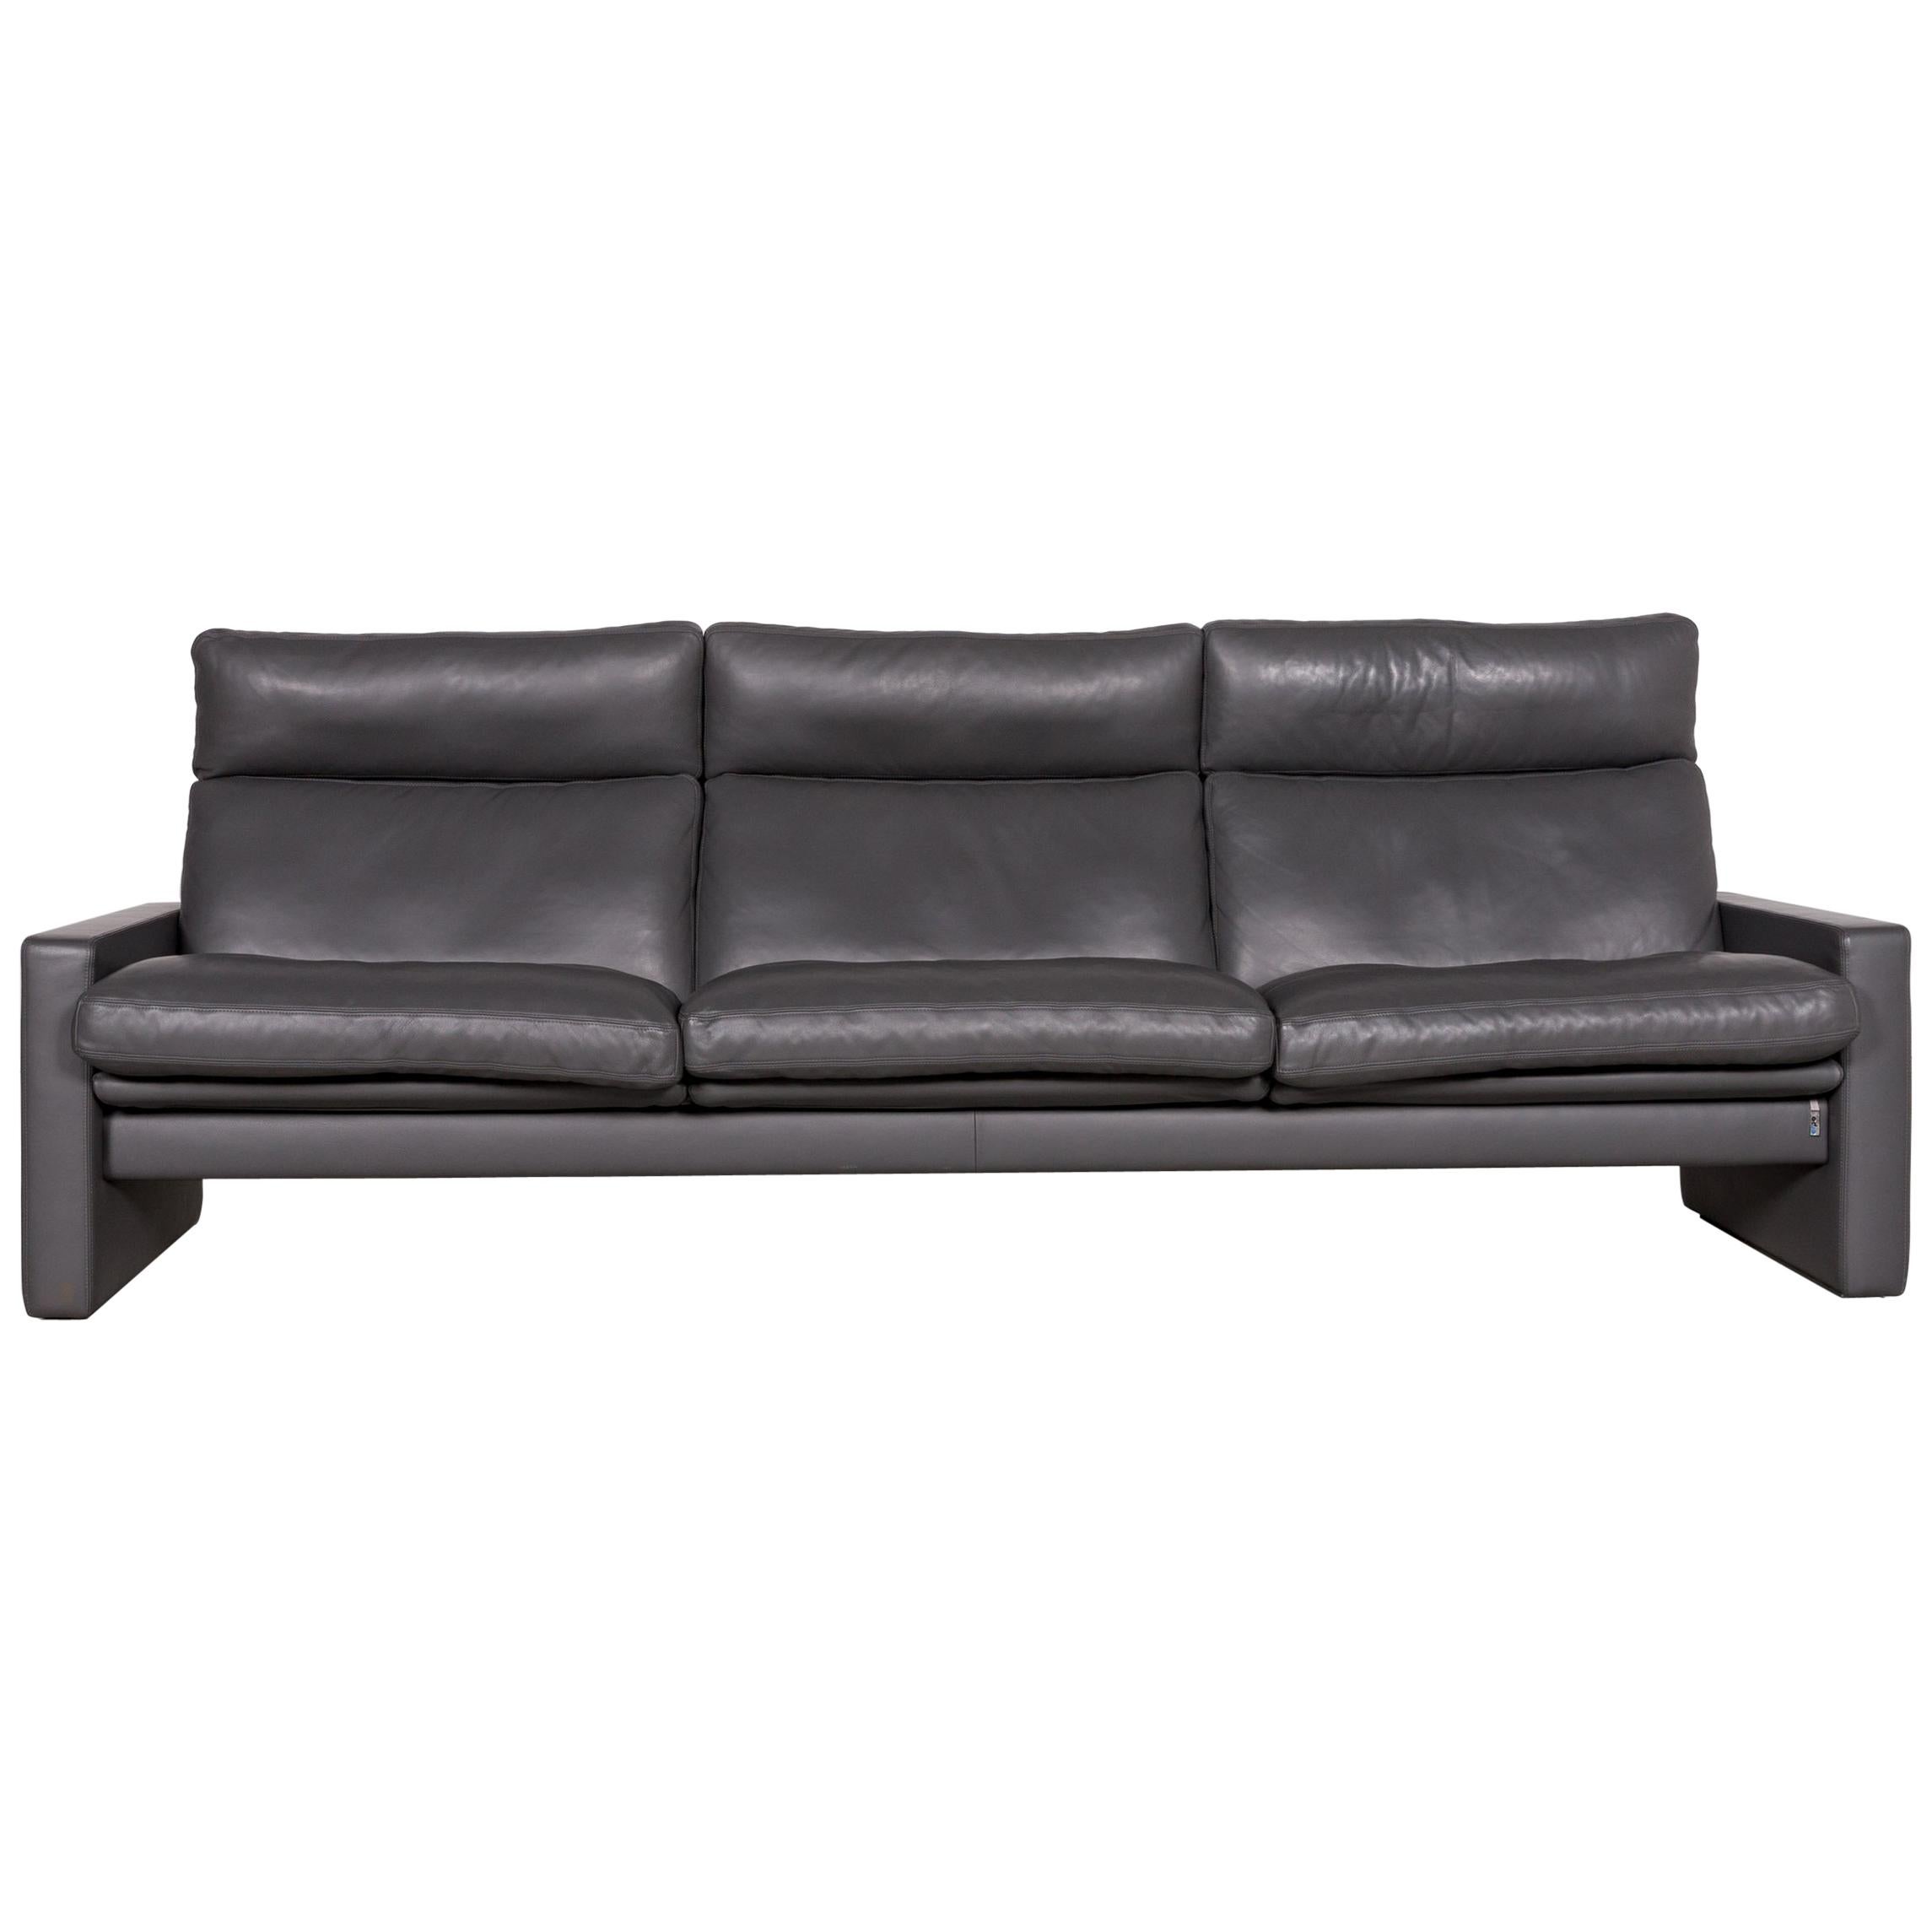 Erpo Manhattan Designer Leather Sofa in Anthracite Grey Three-Seat Couch